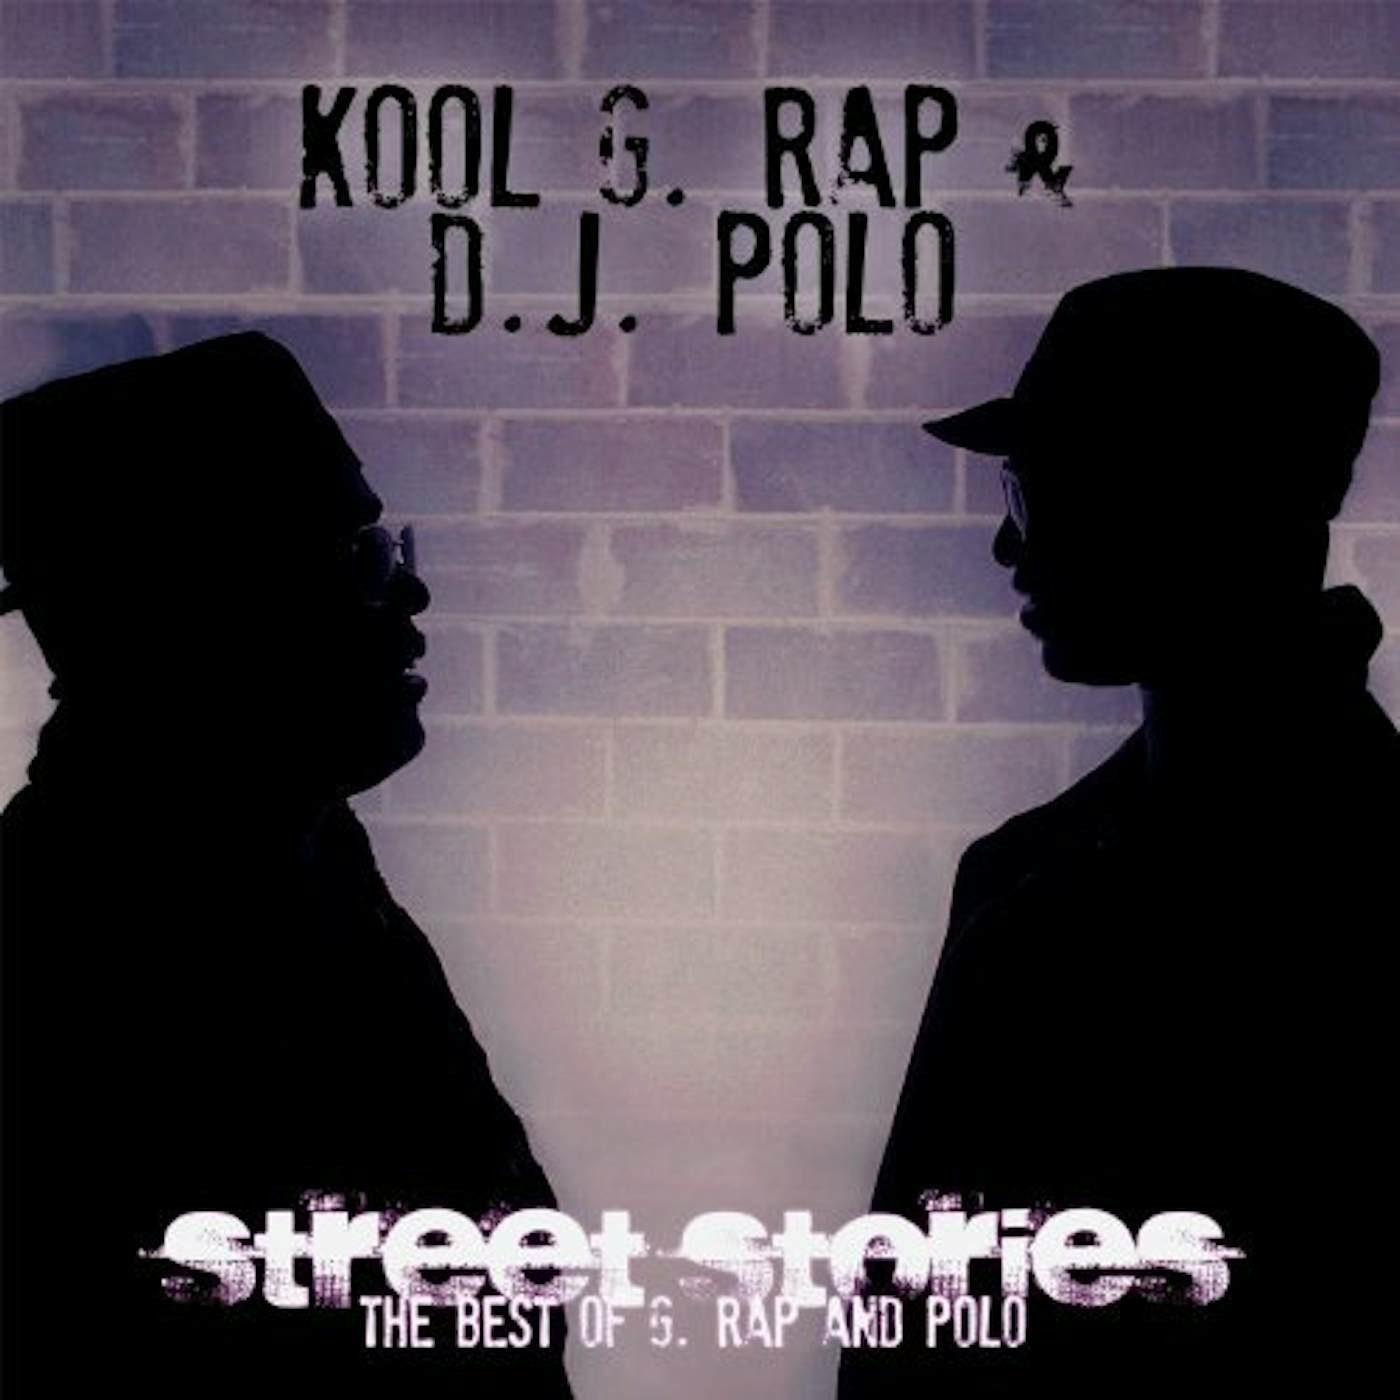 Kool G Rap & DJ Polo STREET STORIES: THE BEST OF G RAP & POLO Vinyl Record